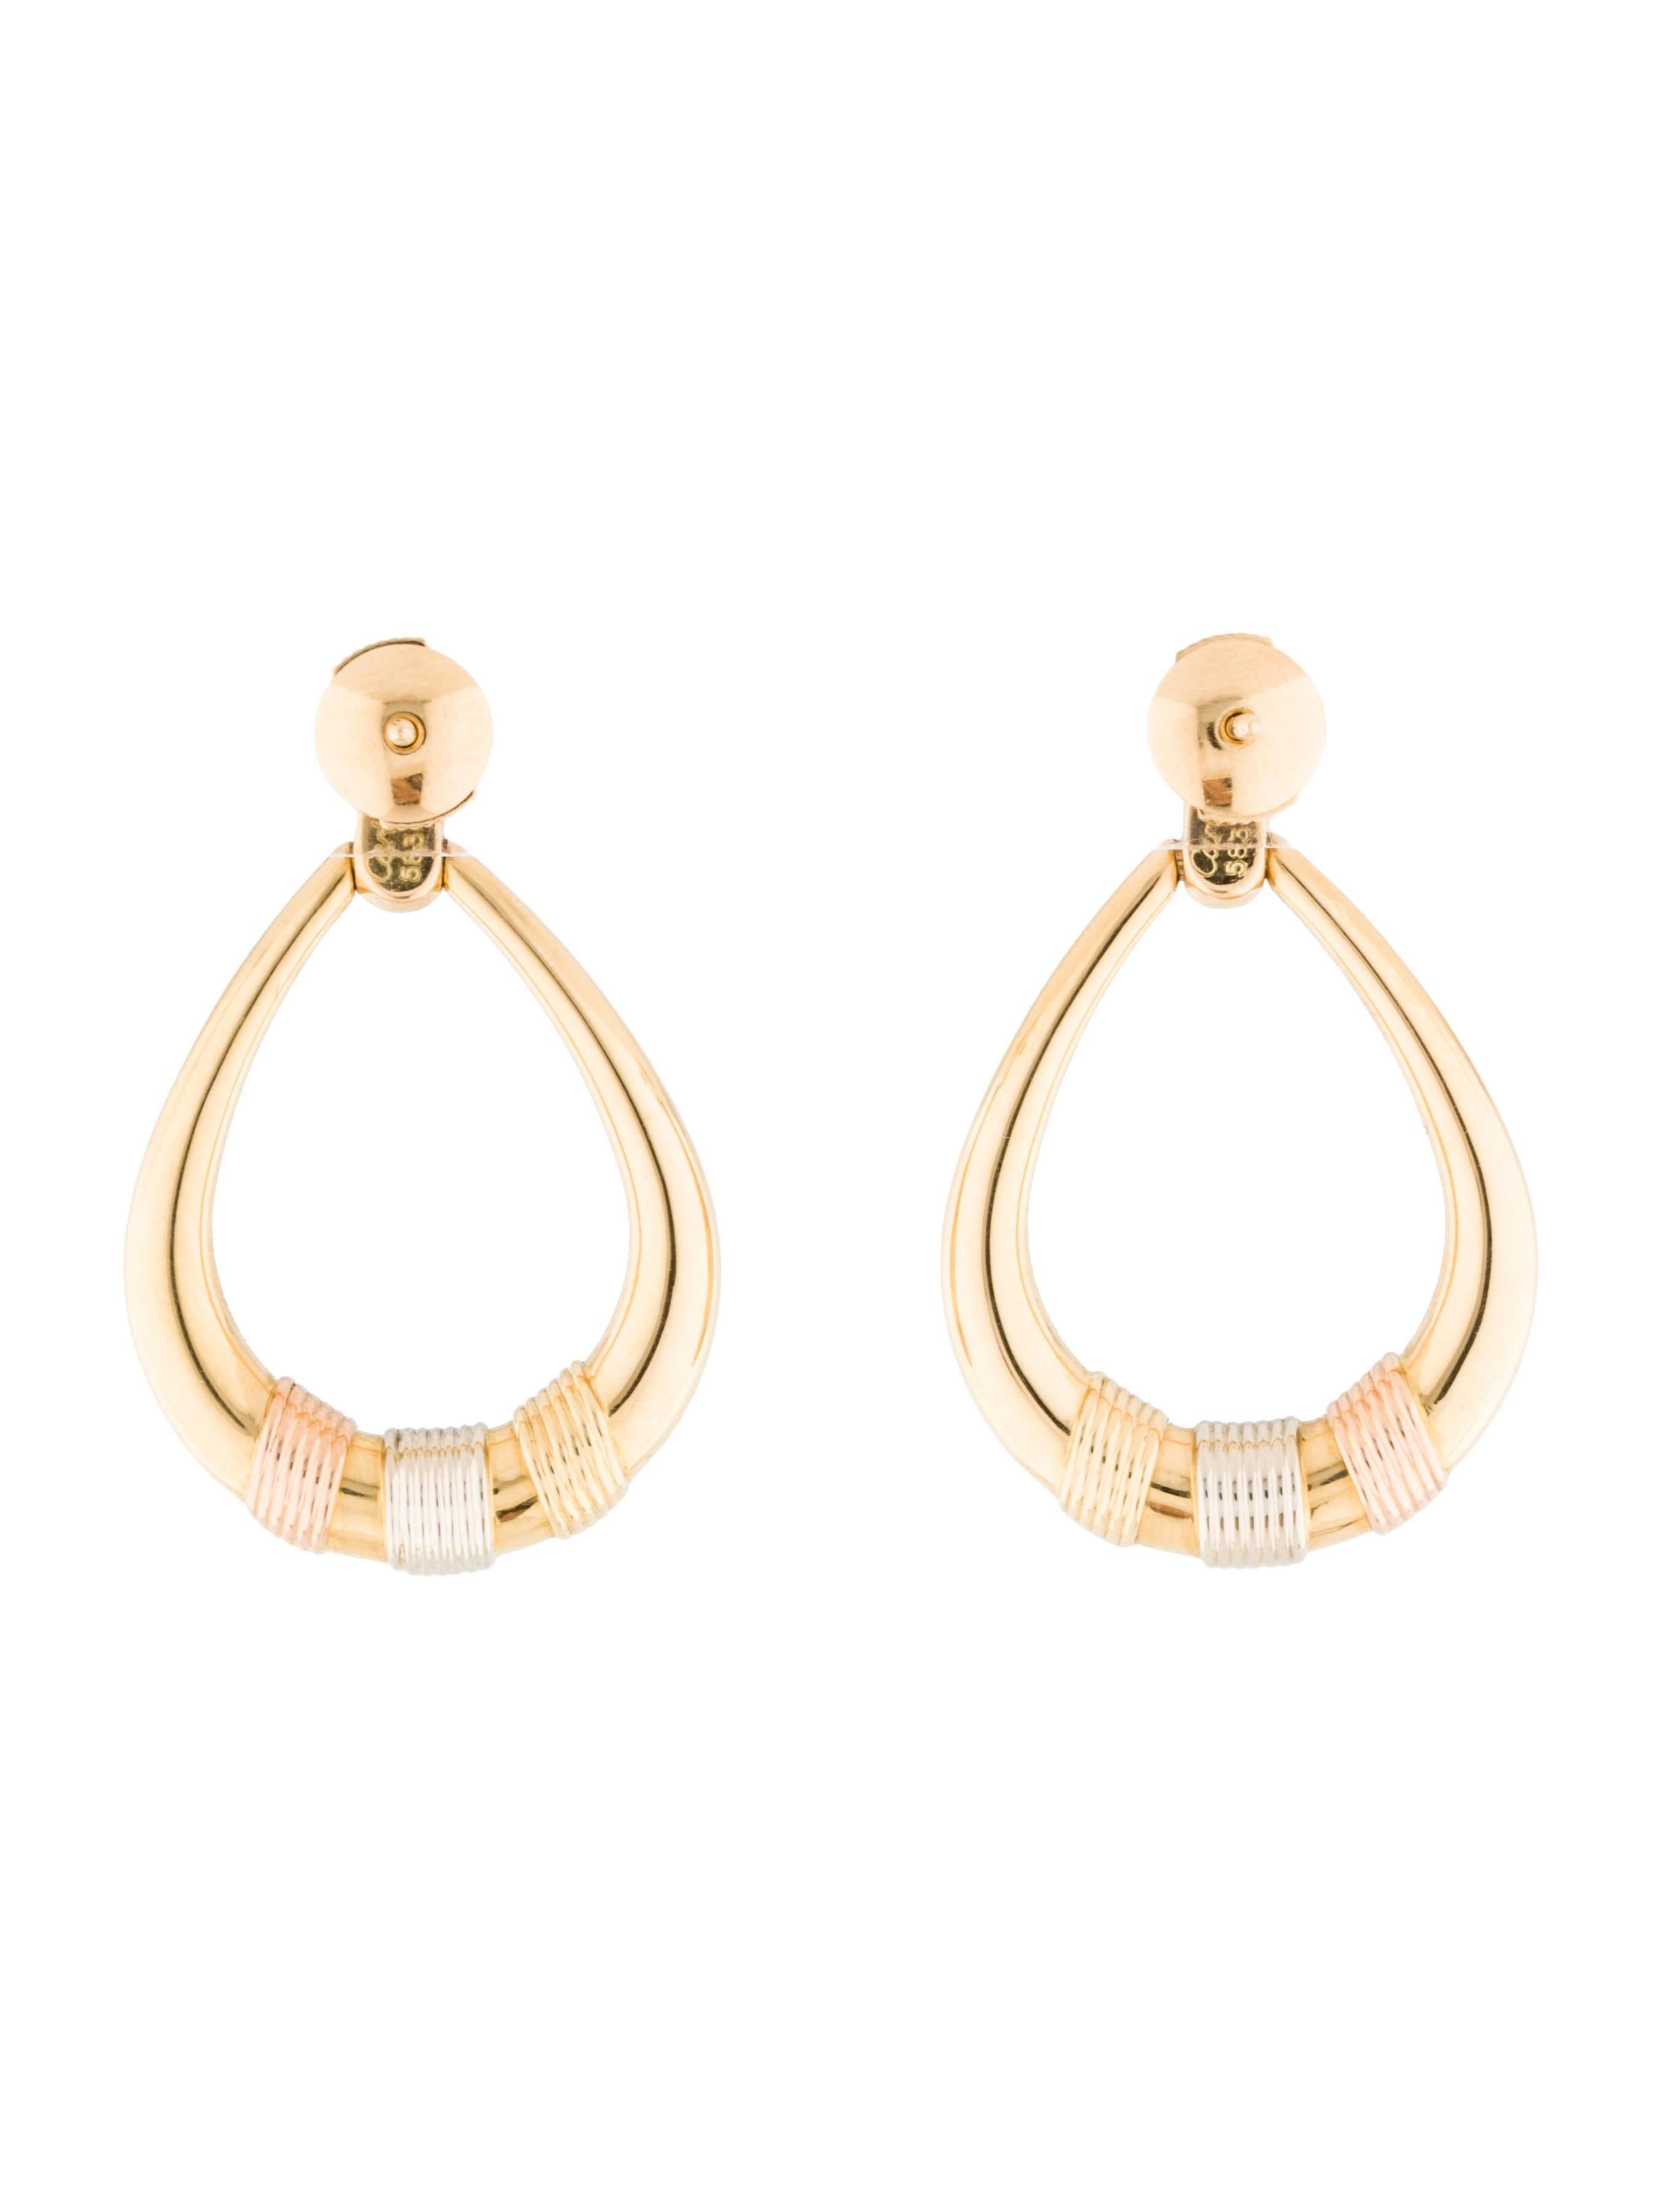 Contemporary Cartier Trinity Gold Drop Earrings